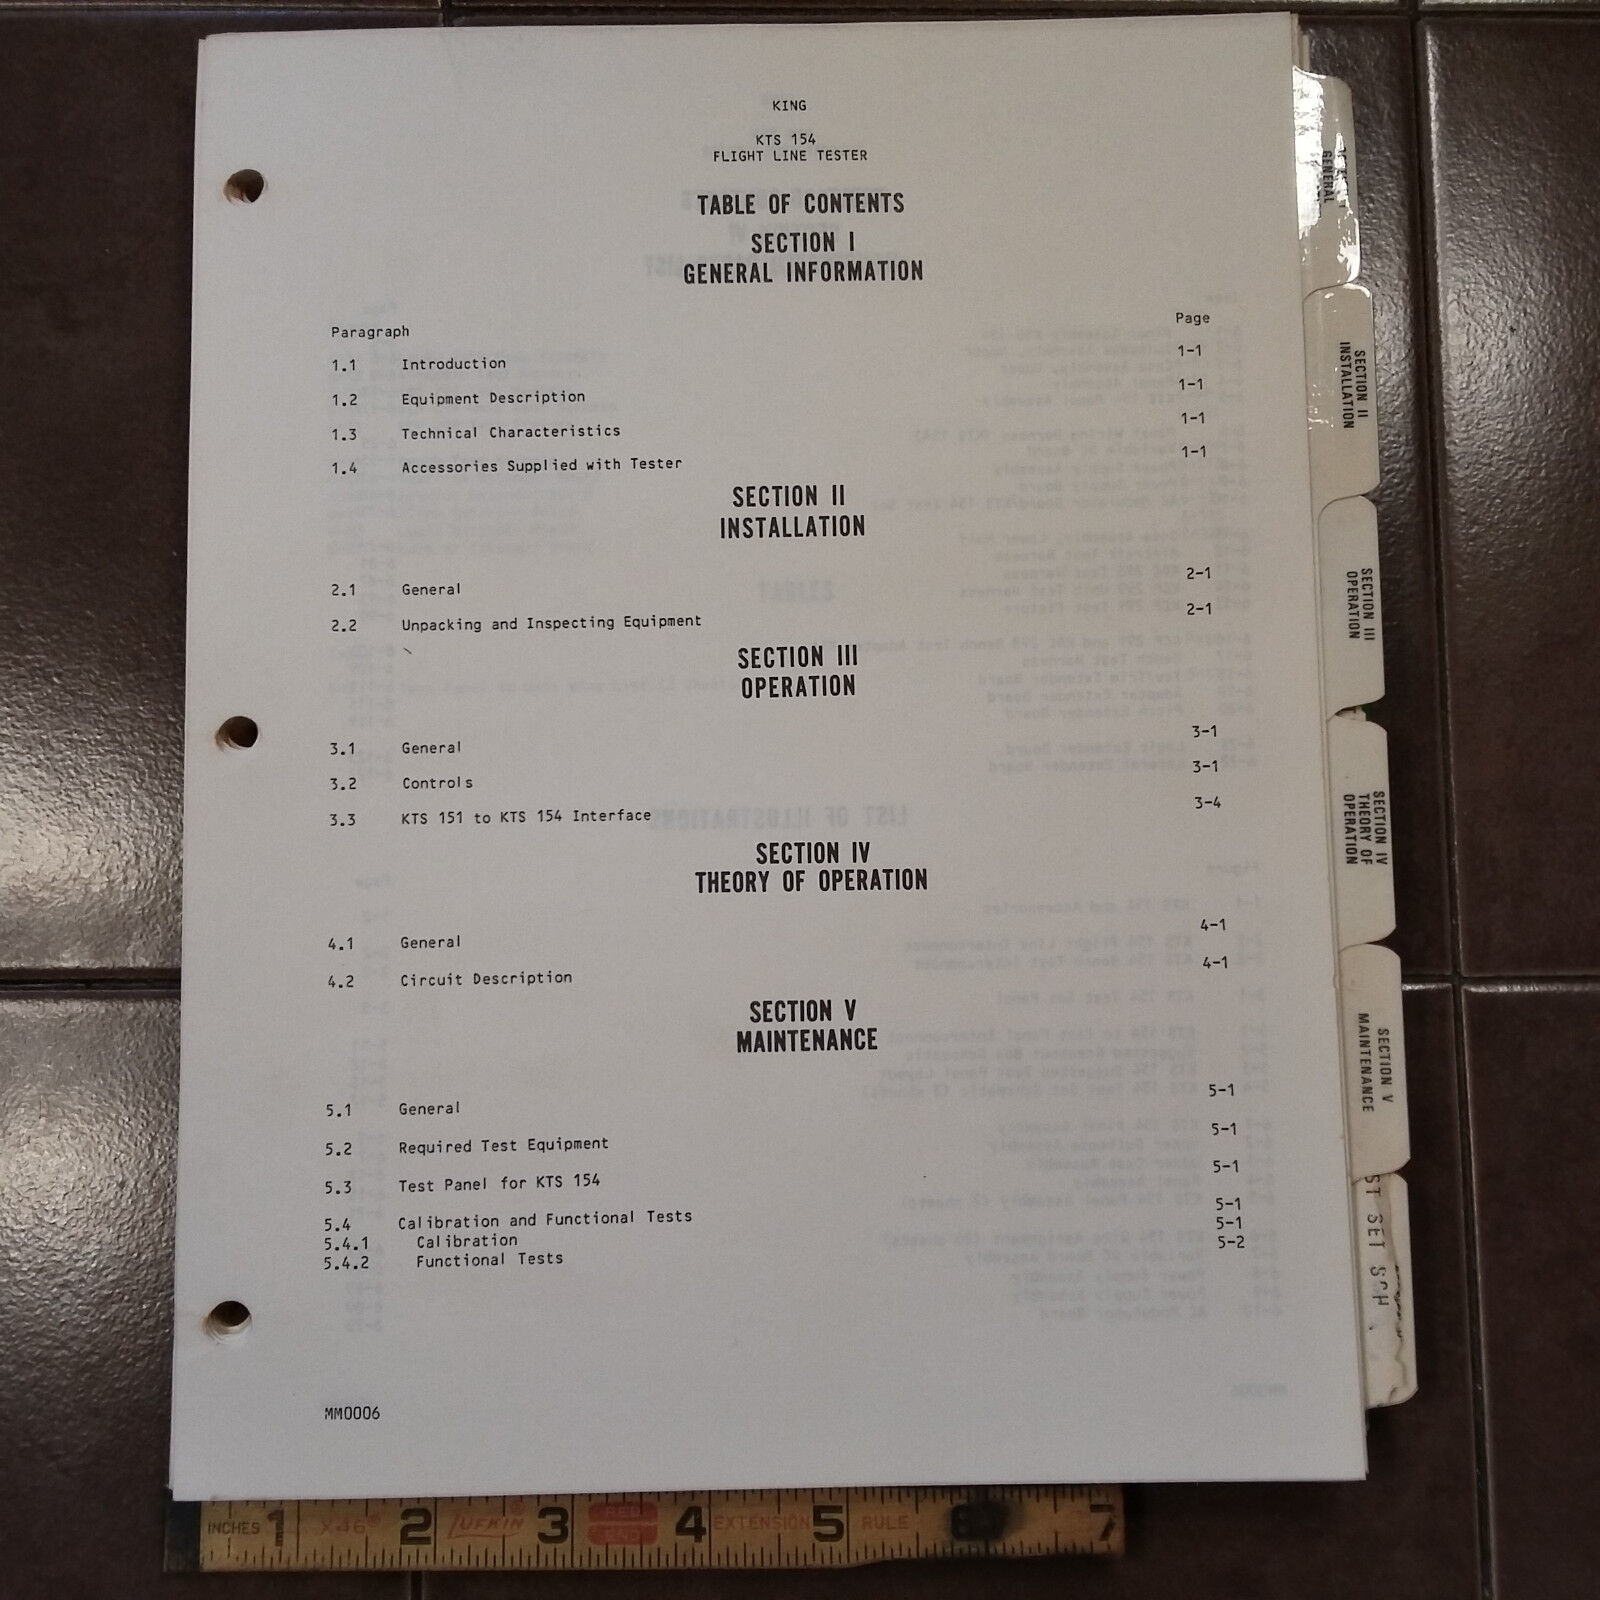 King KTS 154 Flight Line Tester Operation & Service Manual